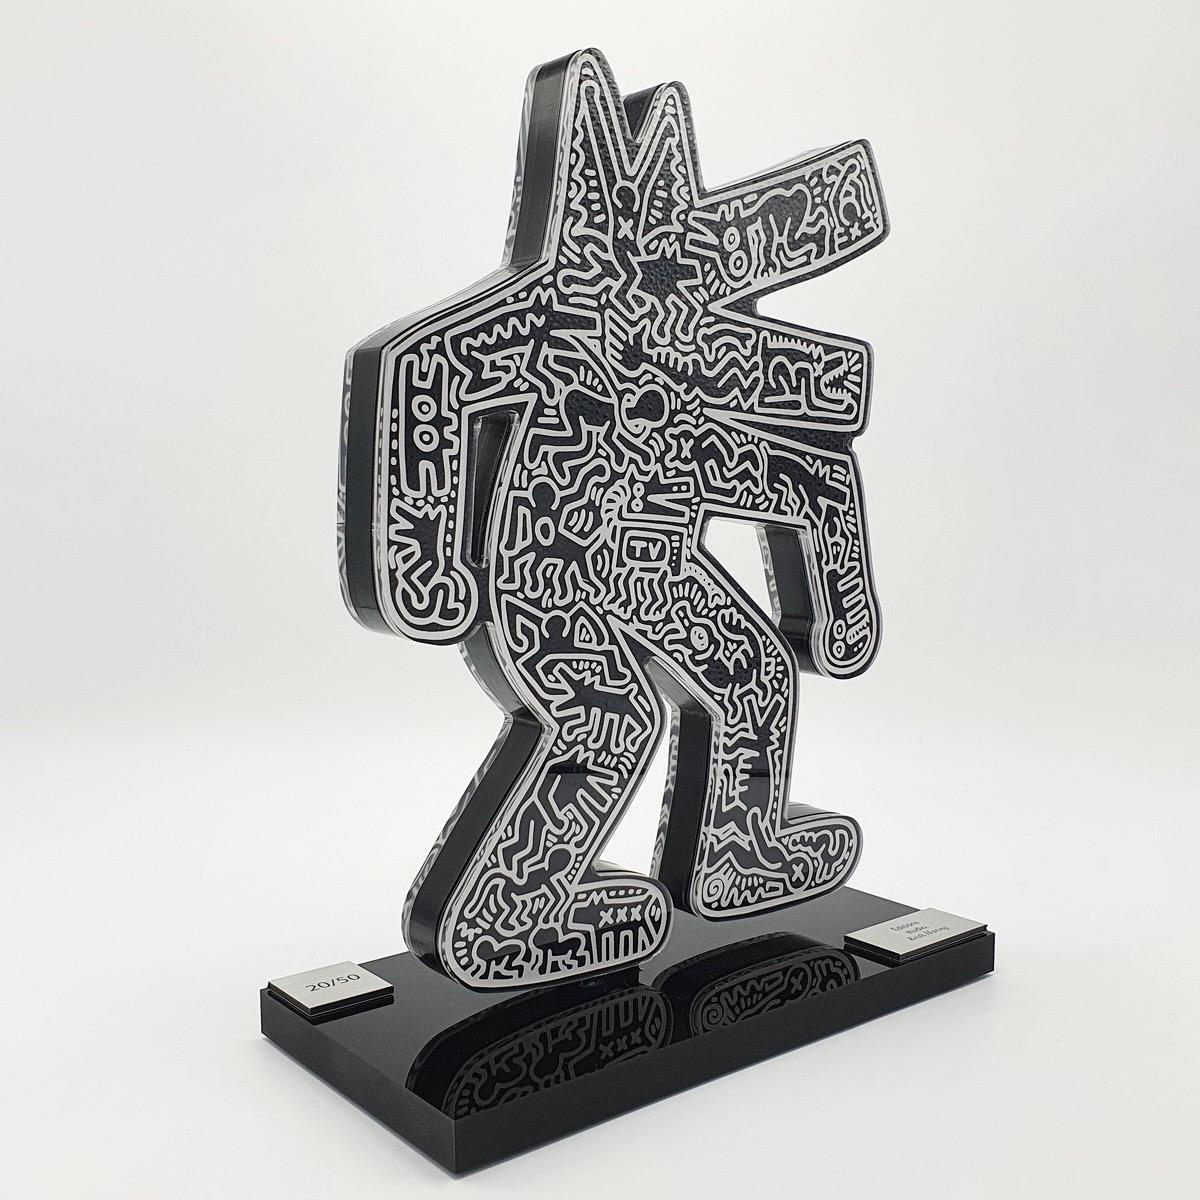 Barking Dog, Contemporary artist Keith Haring.